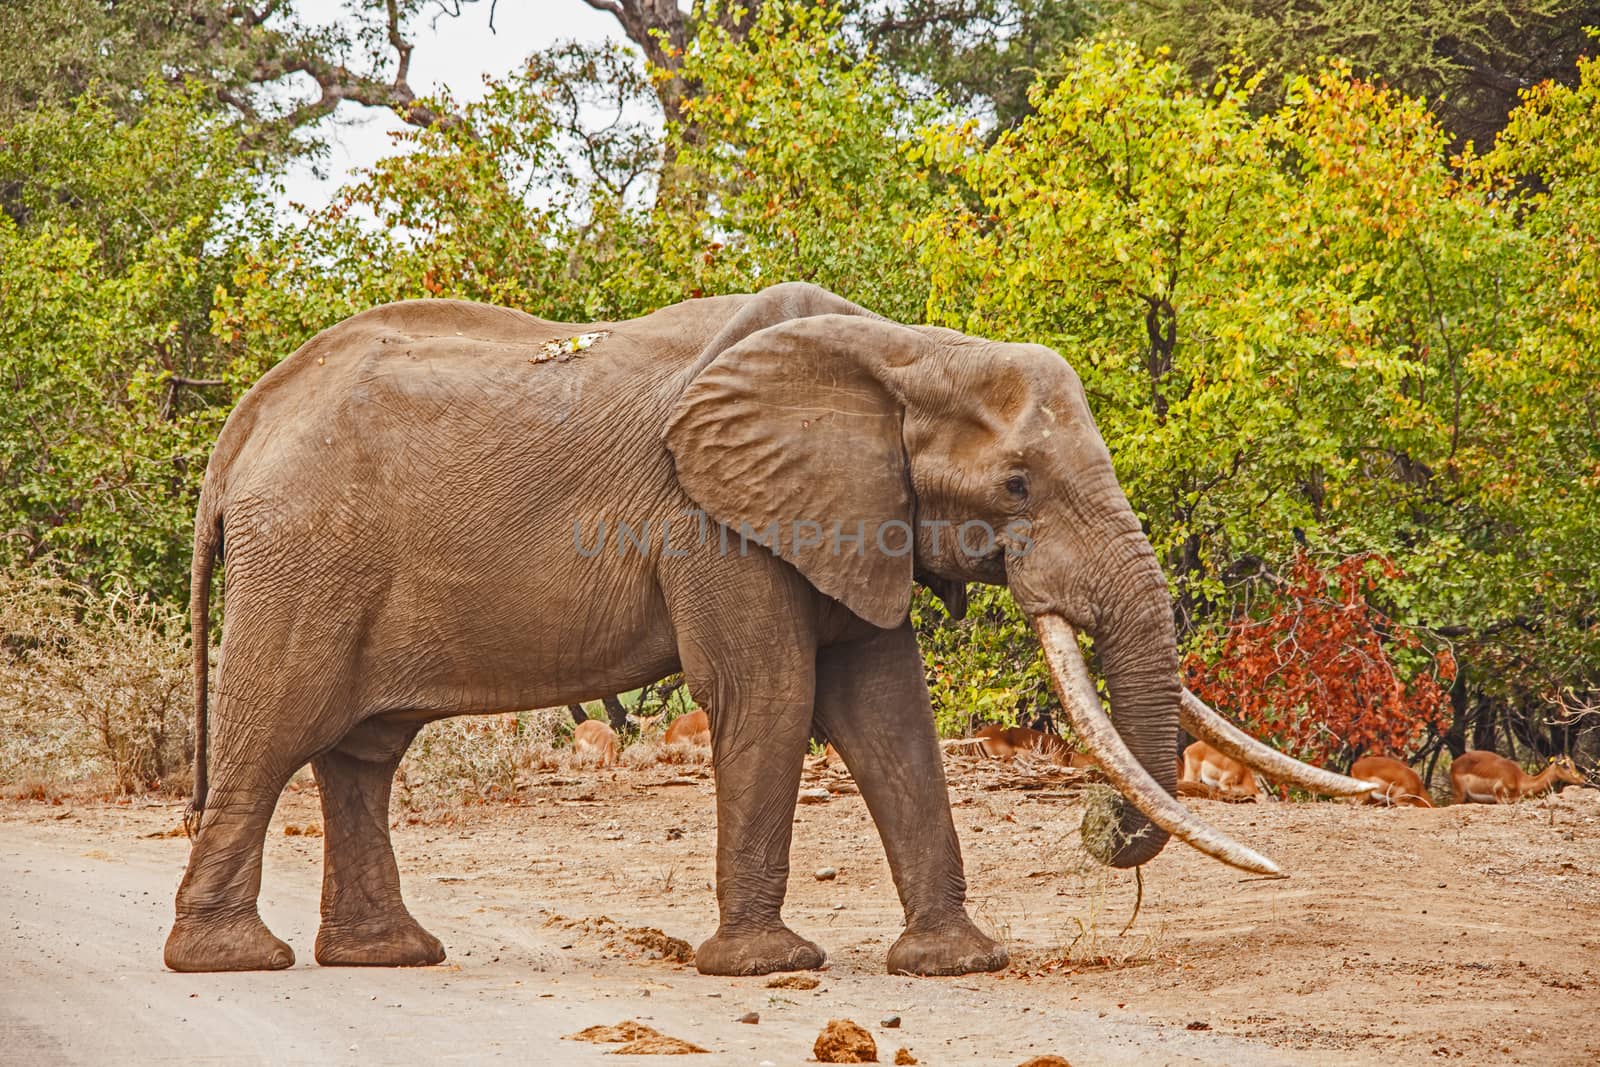 African Elephant (Loxodonta africana) by kobus_peche